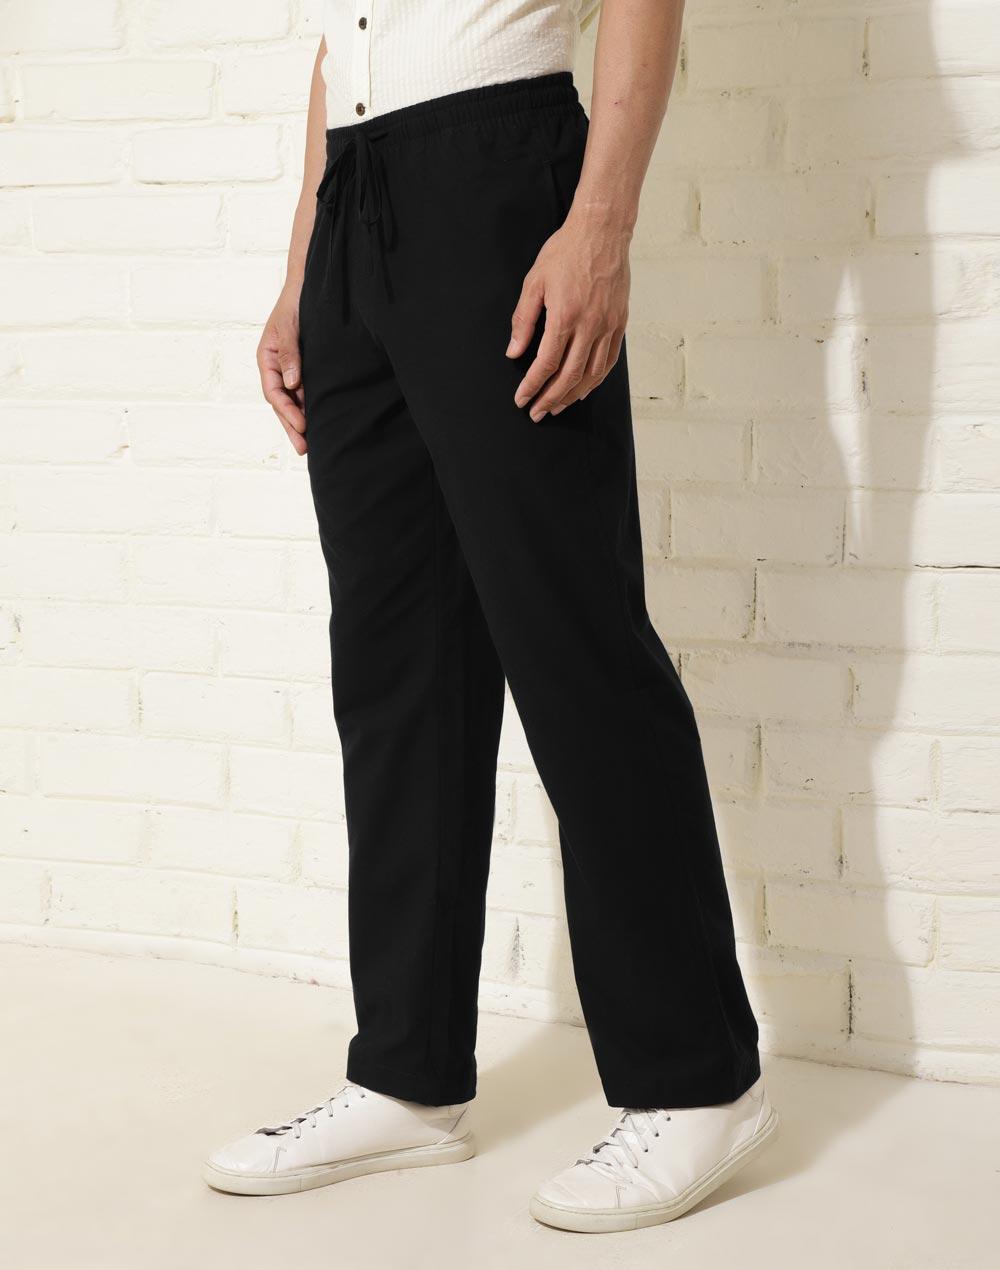 black cotton comfort fit drawstring pants